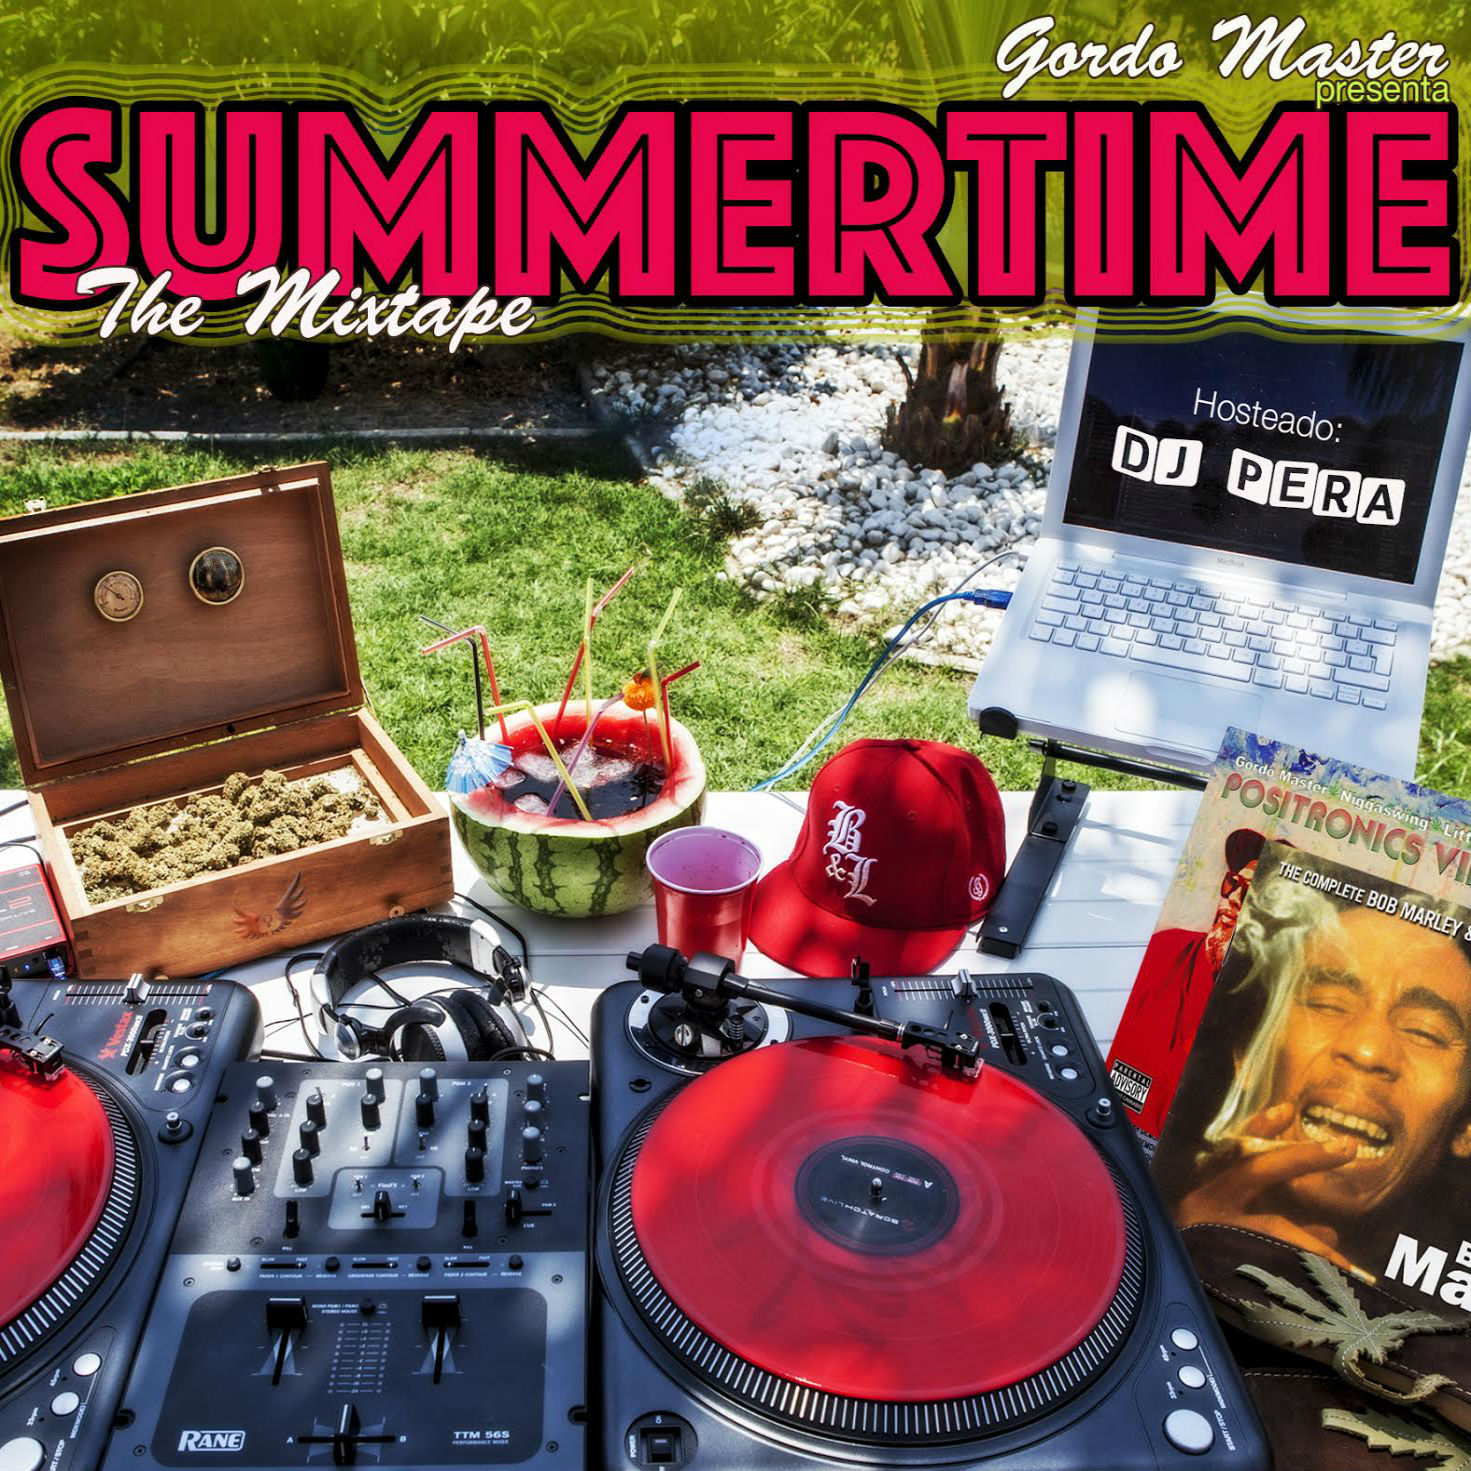 2015-gordo-master-summertime-the-mixtape-mx-portada